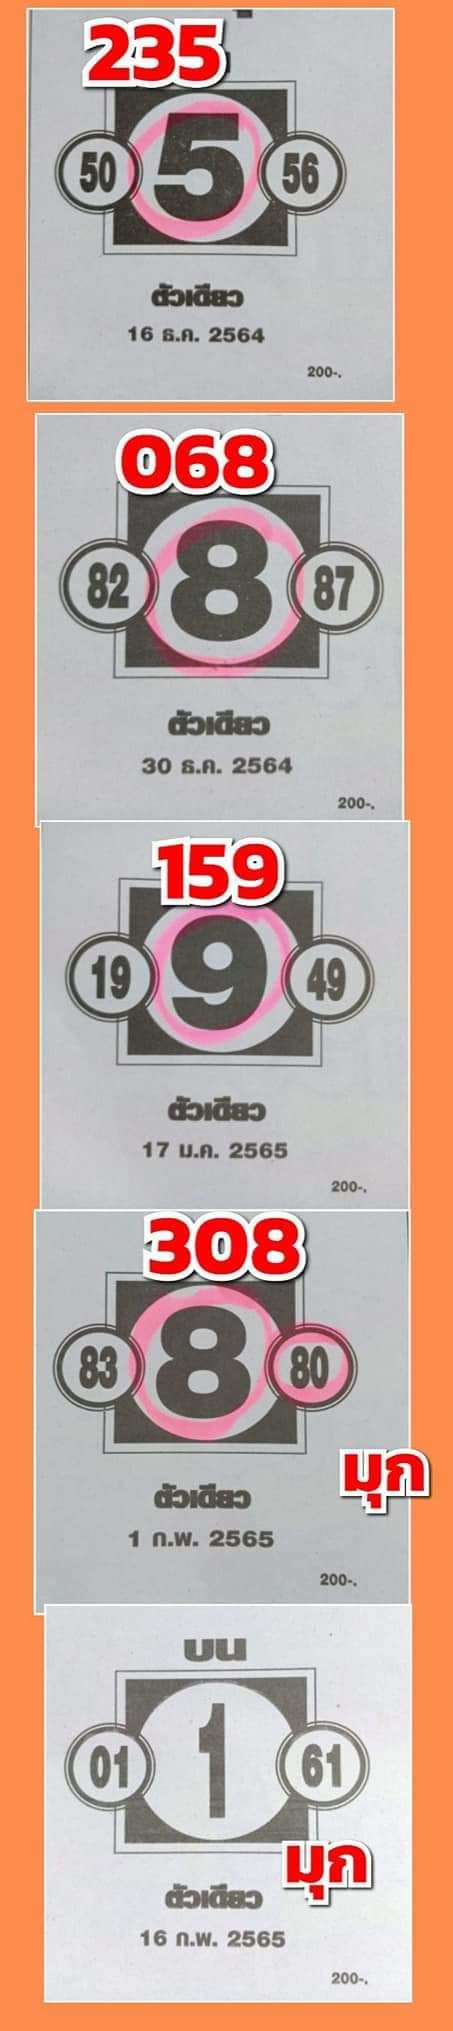 Mr-Shuk Lal Lotto 100% Free 16-02-2022 - Page 7 3602cc10